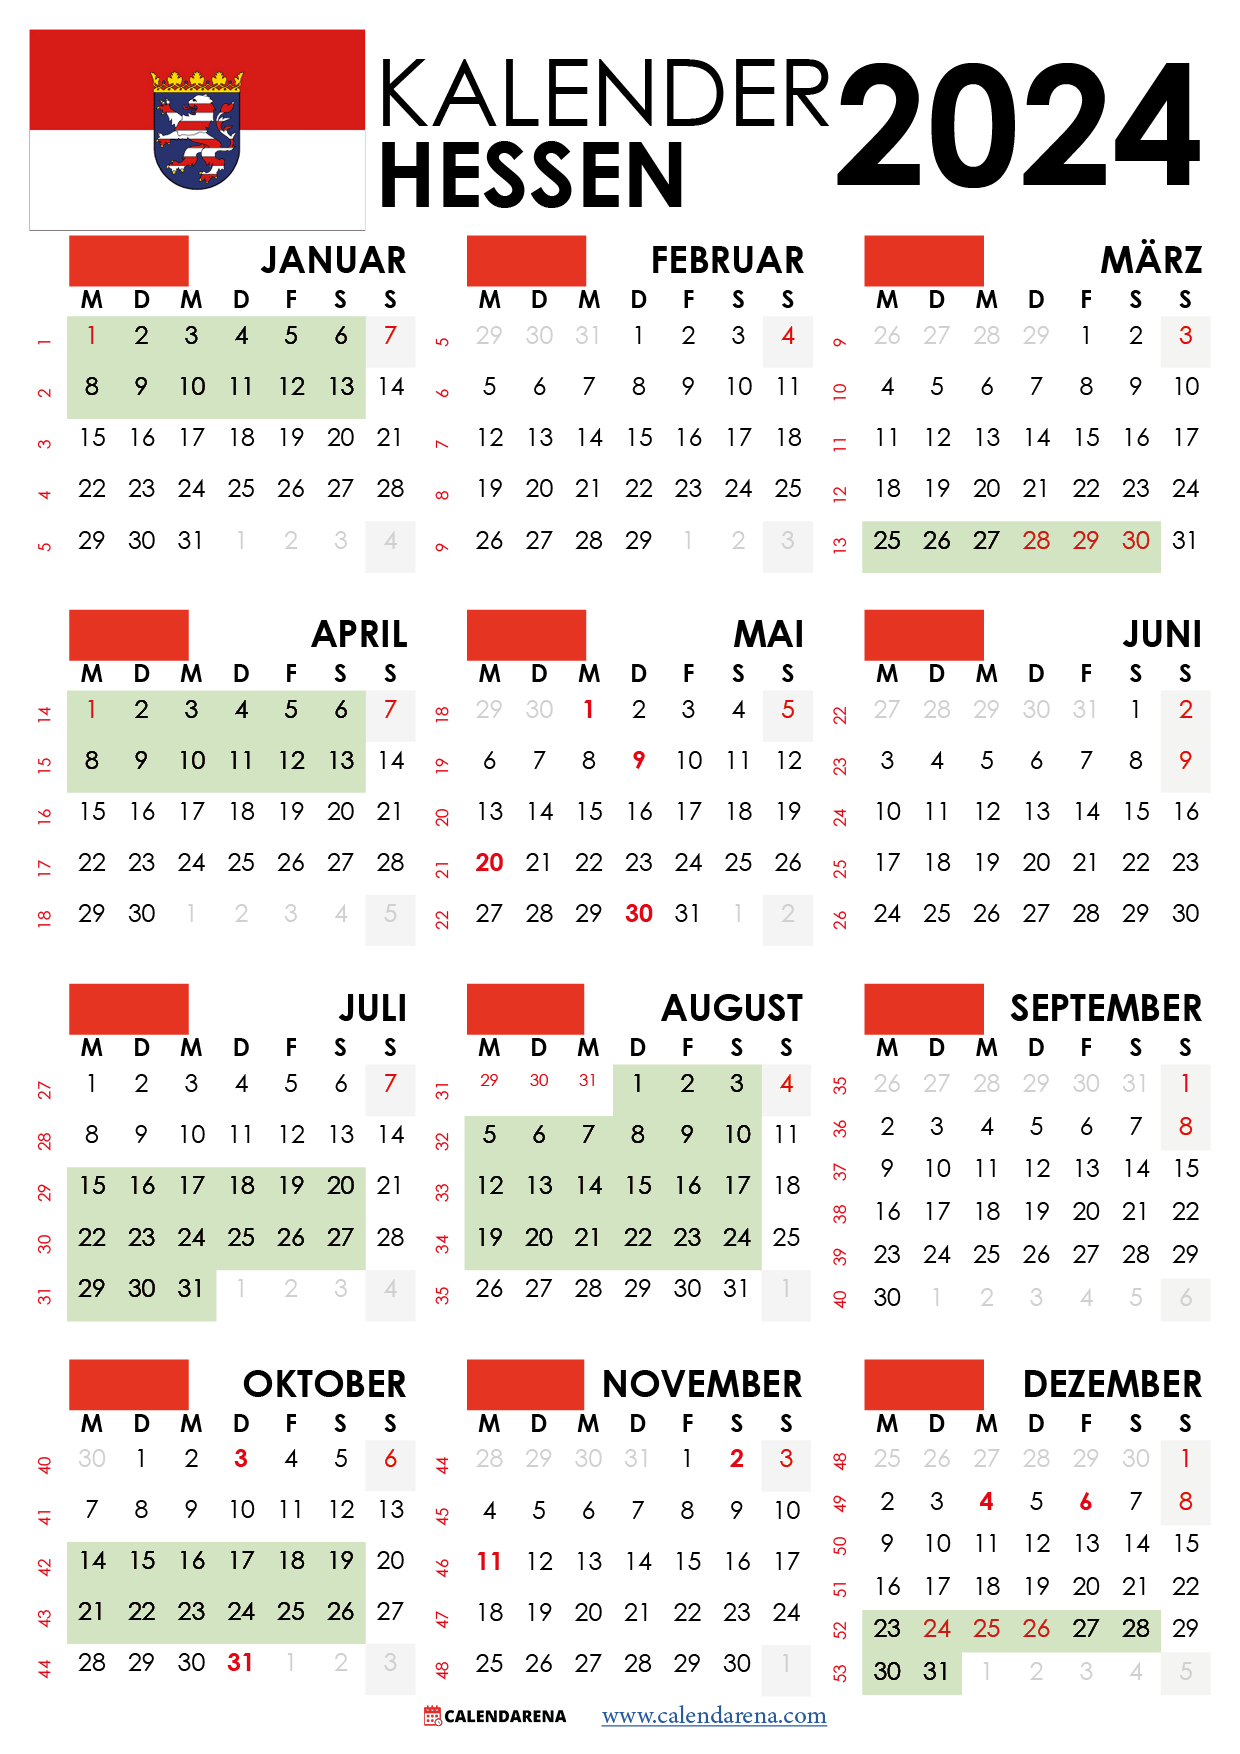 kalender hessen 2024